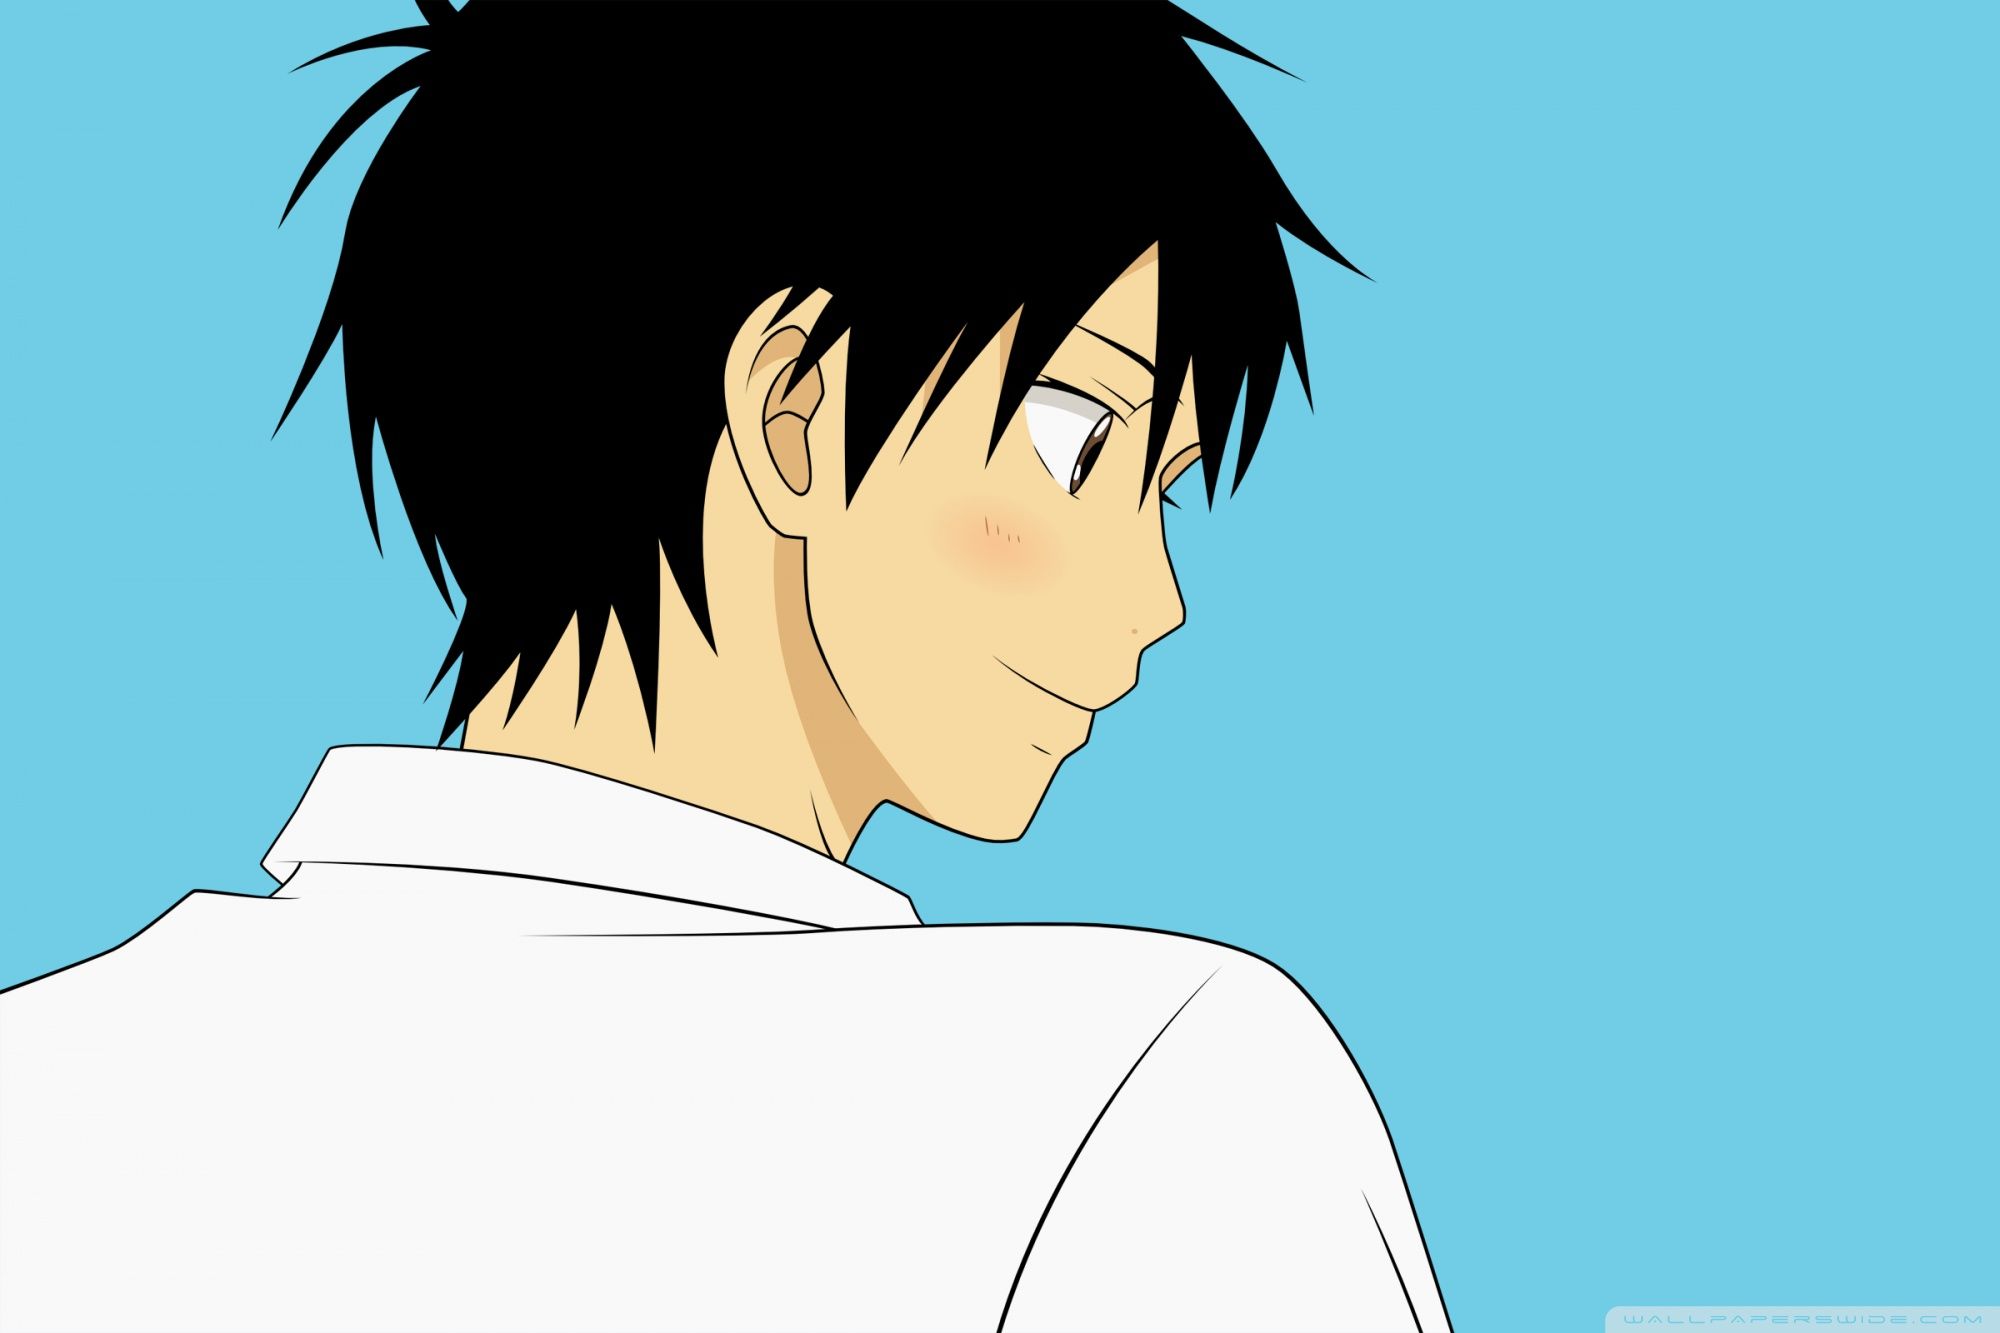 Anime Guy With Black Hair Ultra HD Desktop Background Wallpaper for 4K UHD TV, Tablet